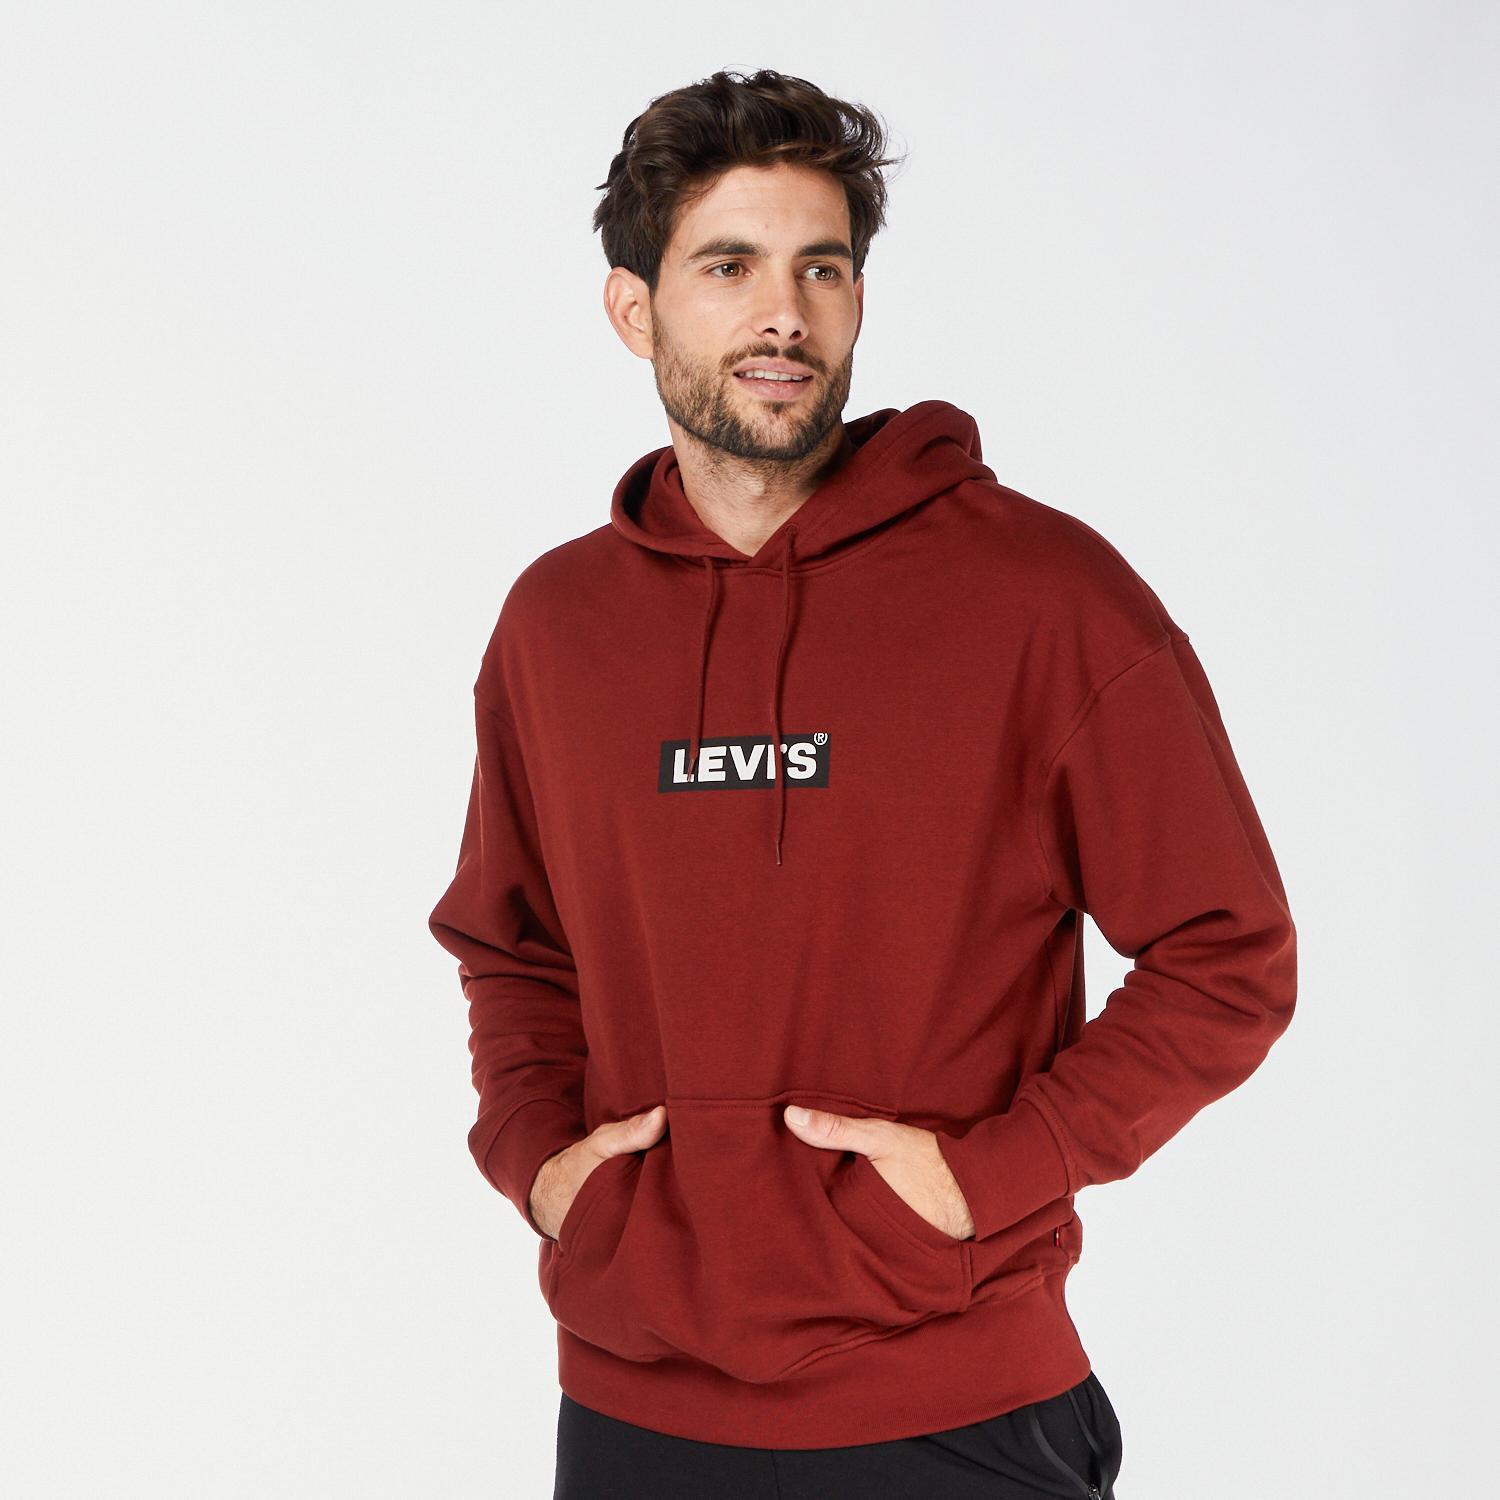 Levi's Original - Vermelho - Sweatshirt Homem tamanho L